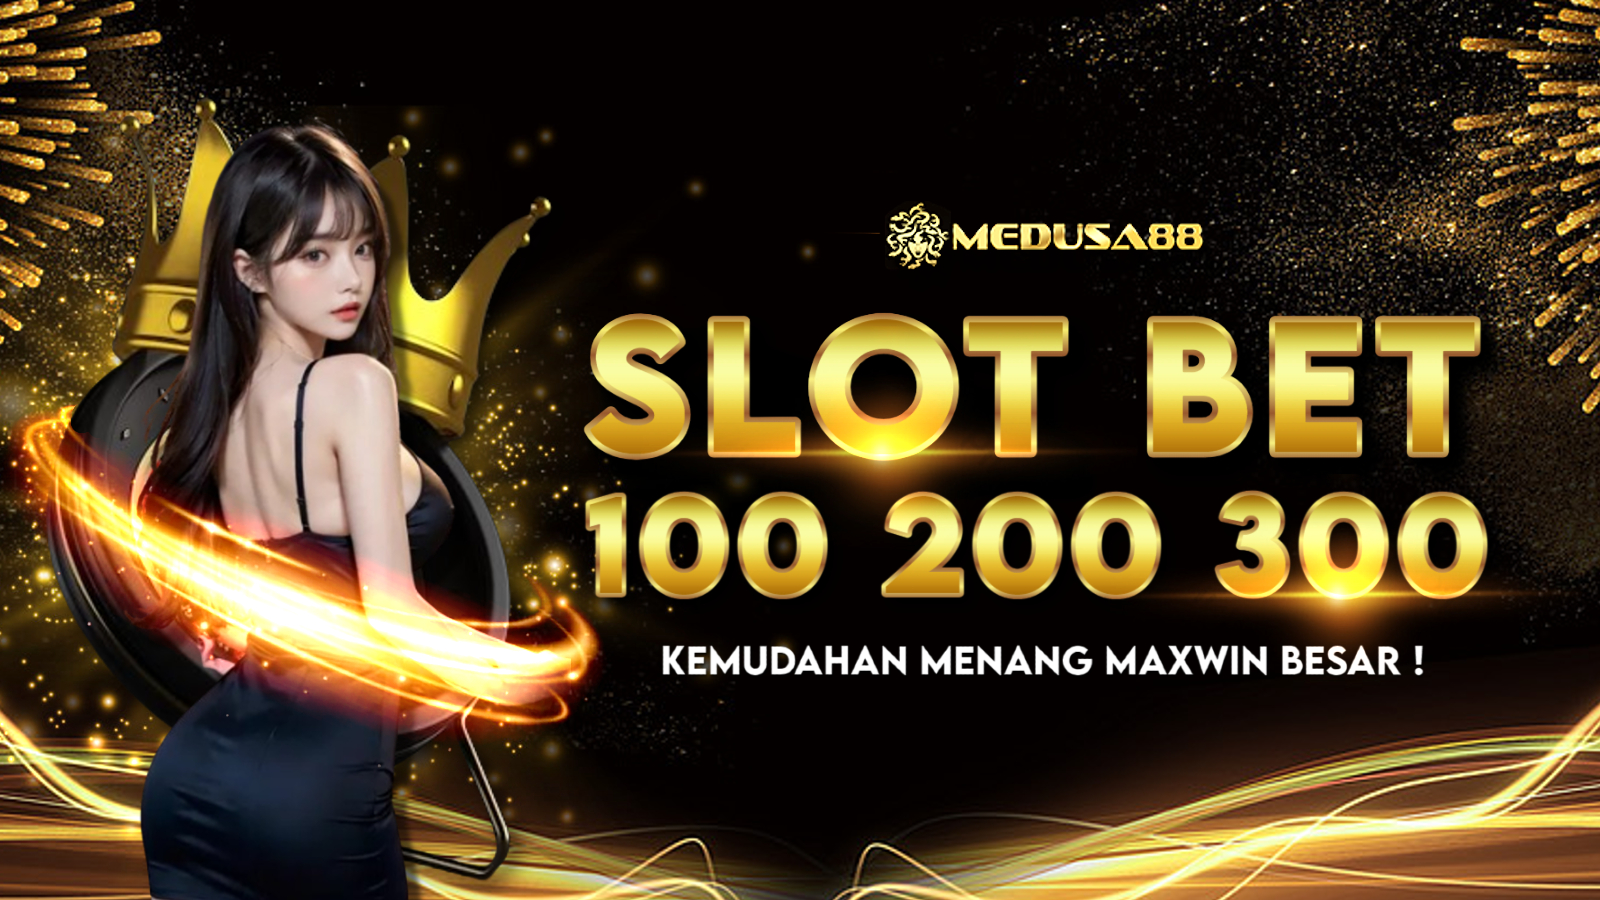 Slot Bet Kecil : Situs Slot Bet 100 200 300 400 500 800 1000 Mudah Menang Jackpot Maxwin